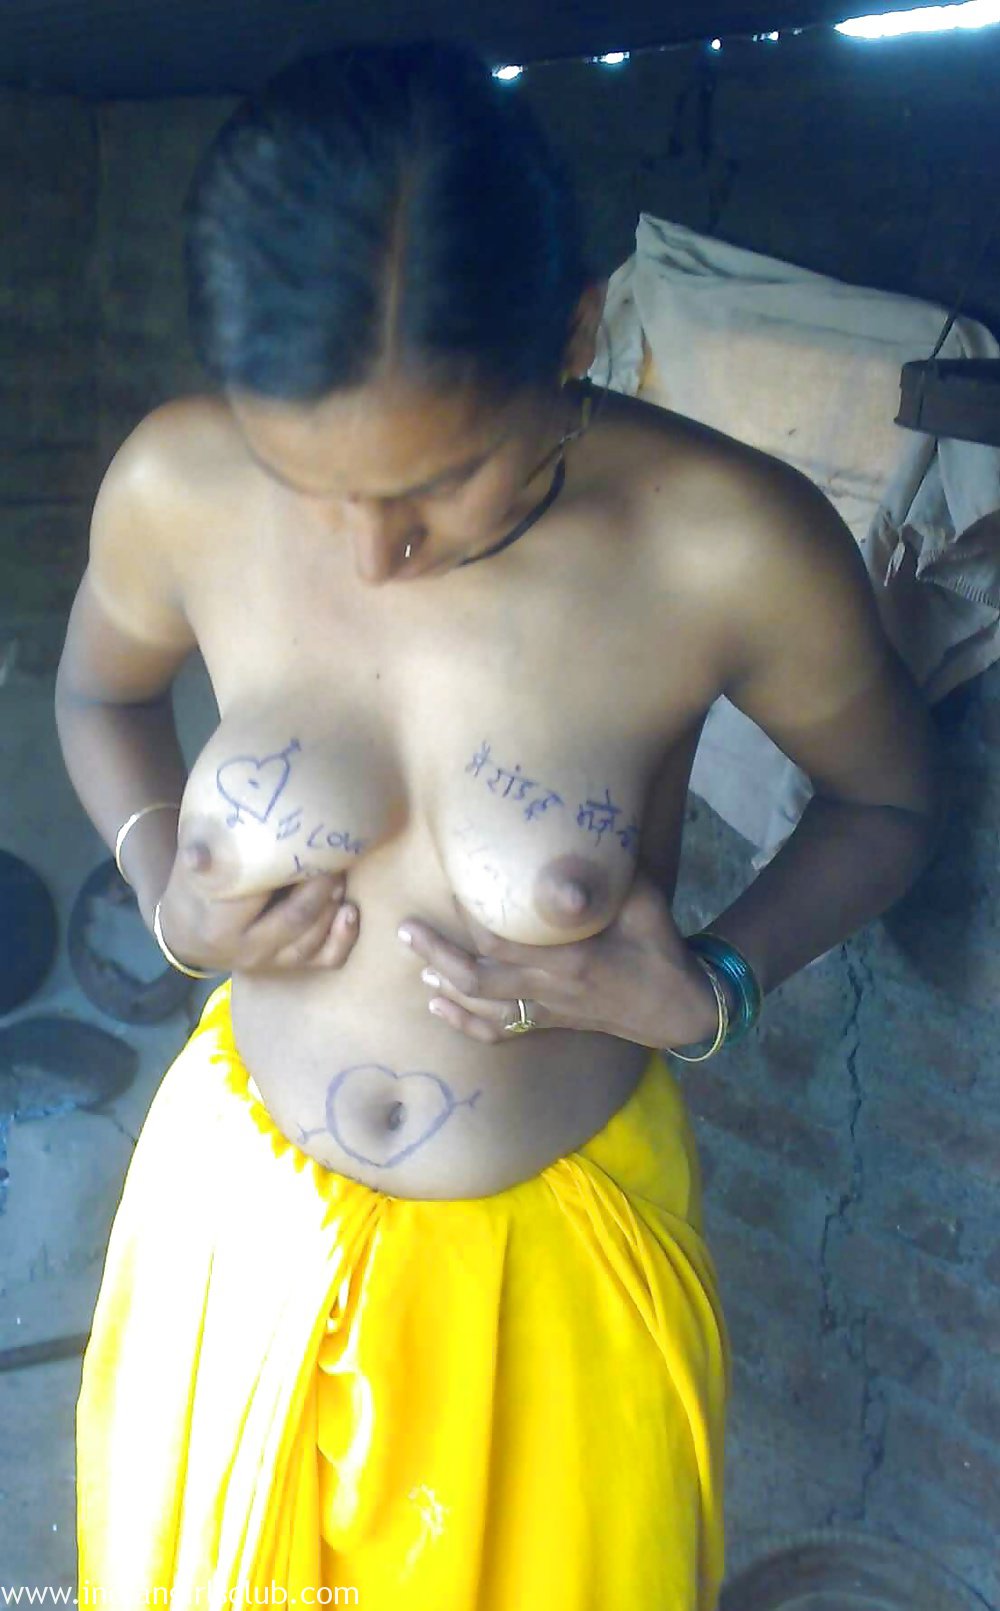 telugu housewife nude photos free pics hd